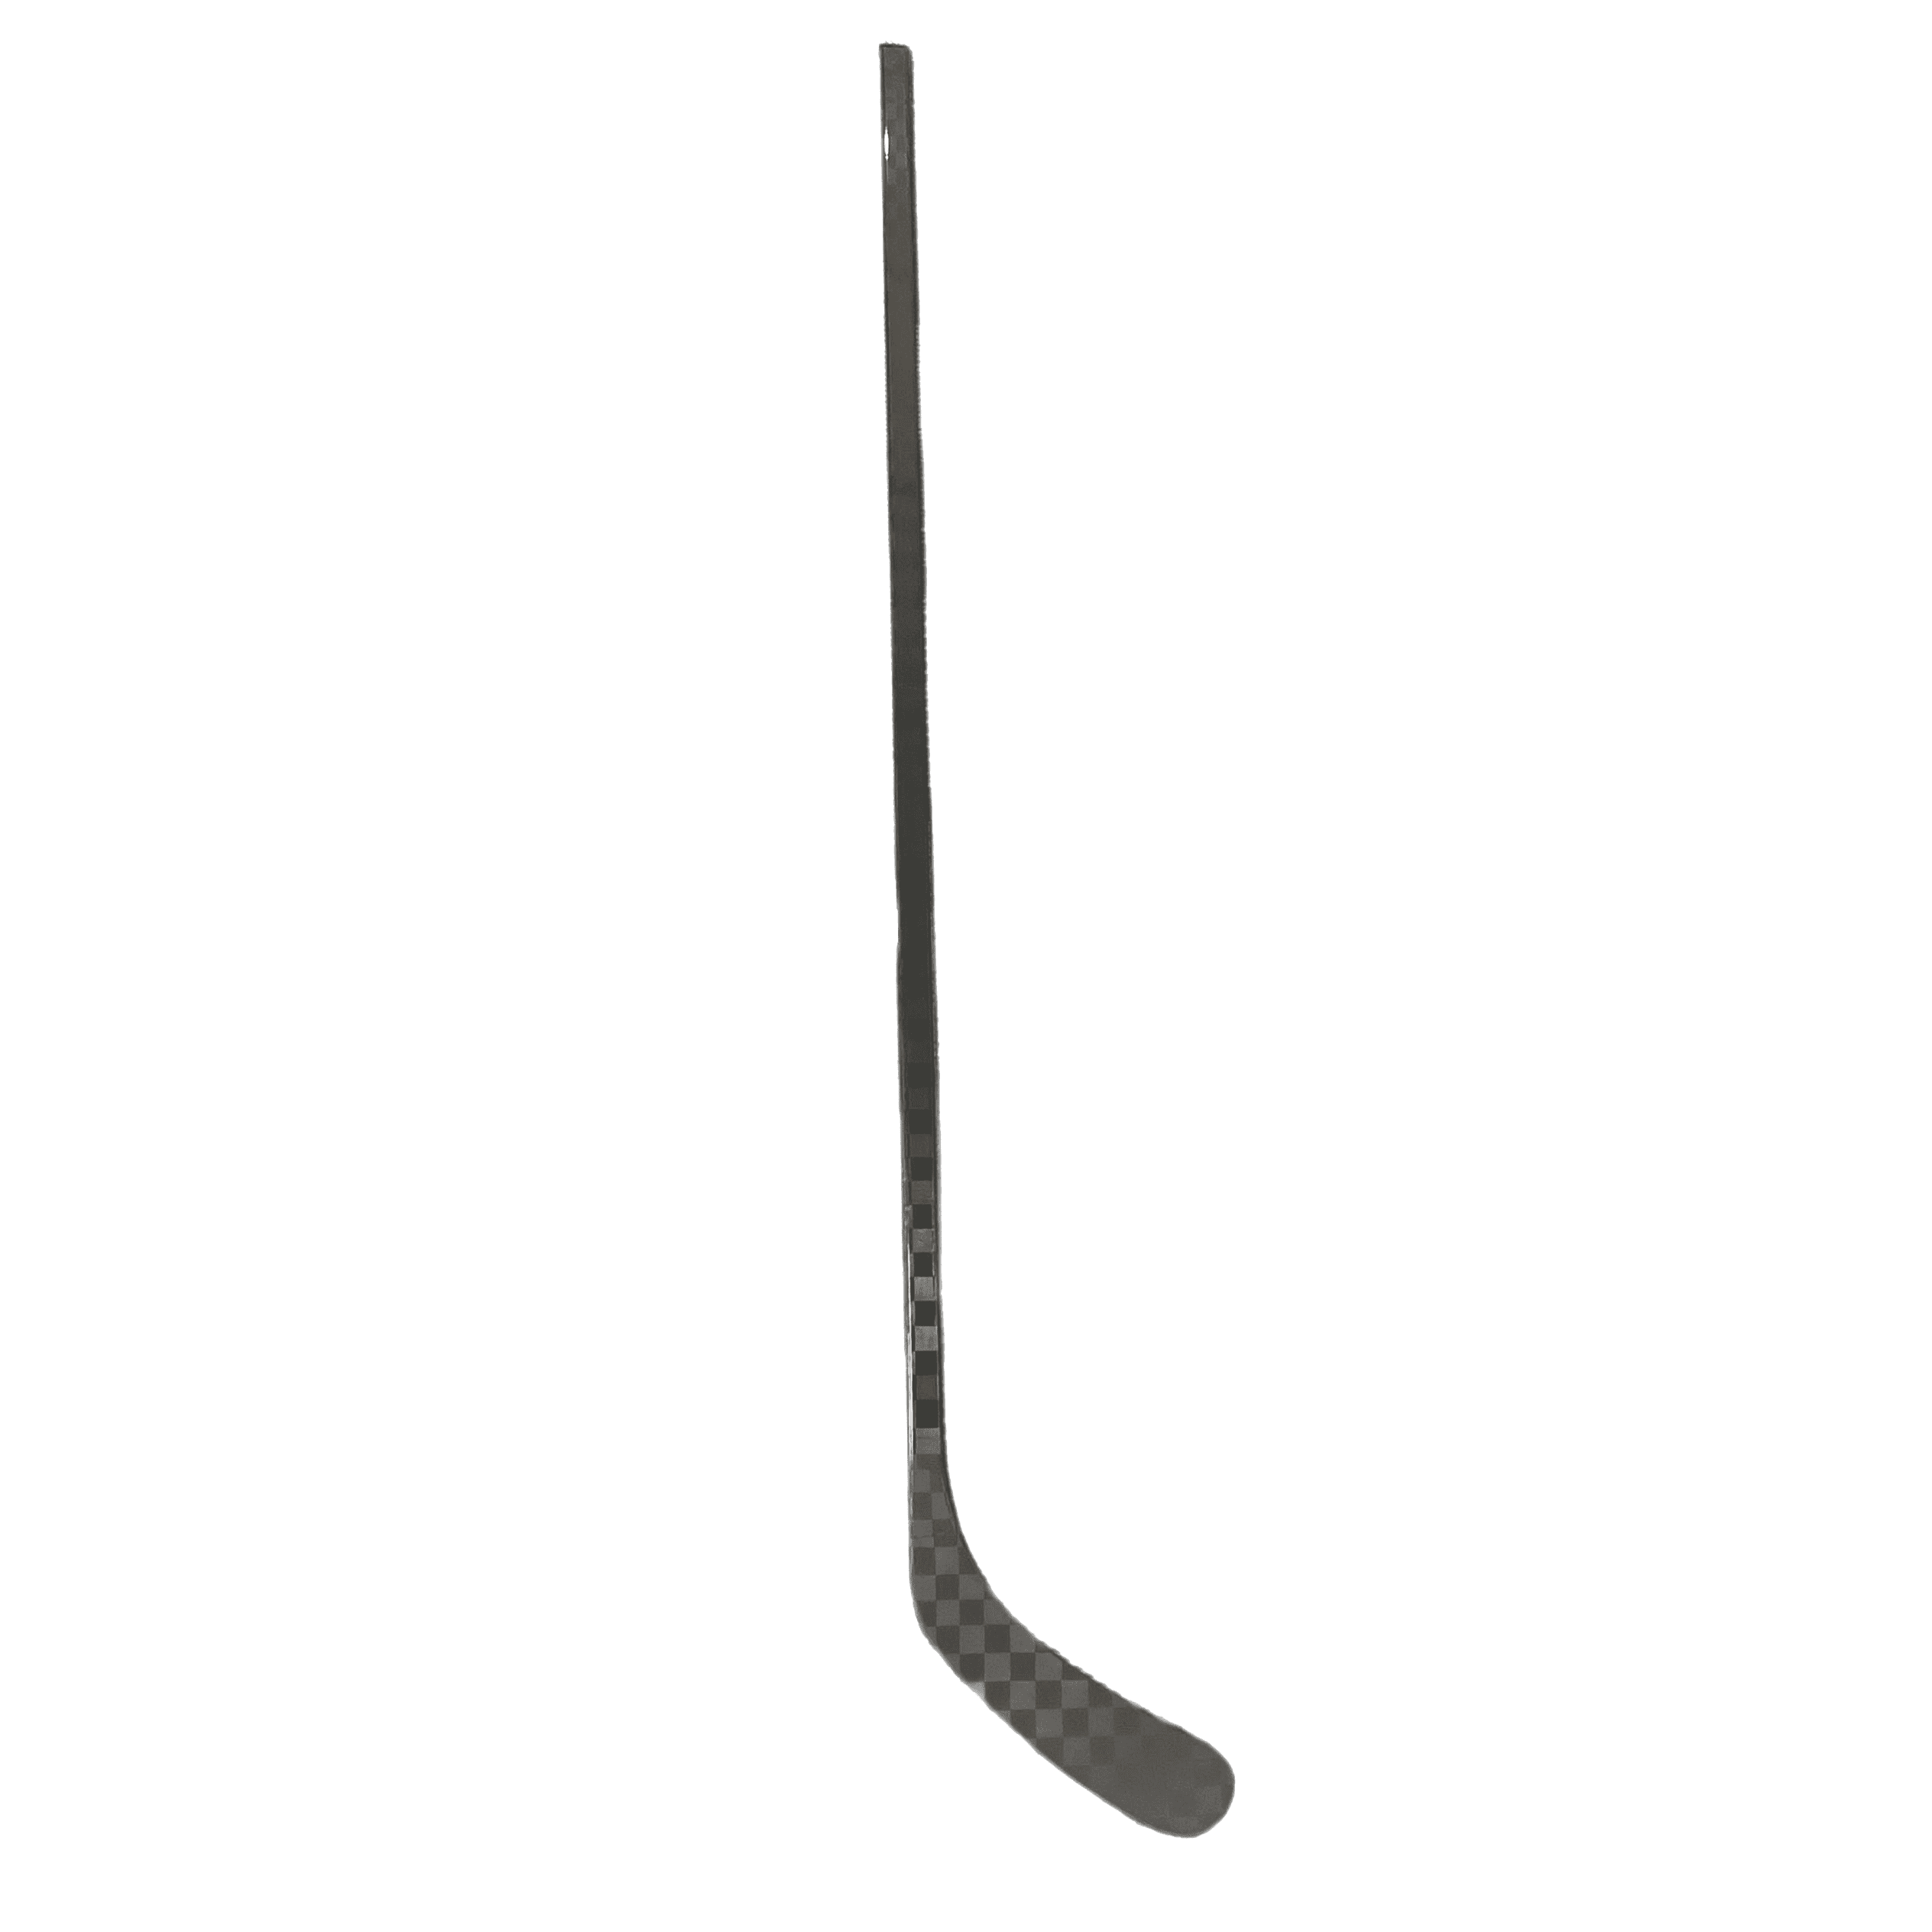 Durable ice hockey sticks